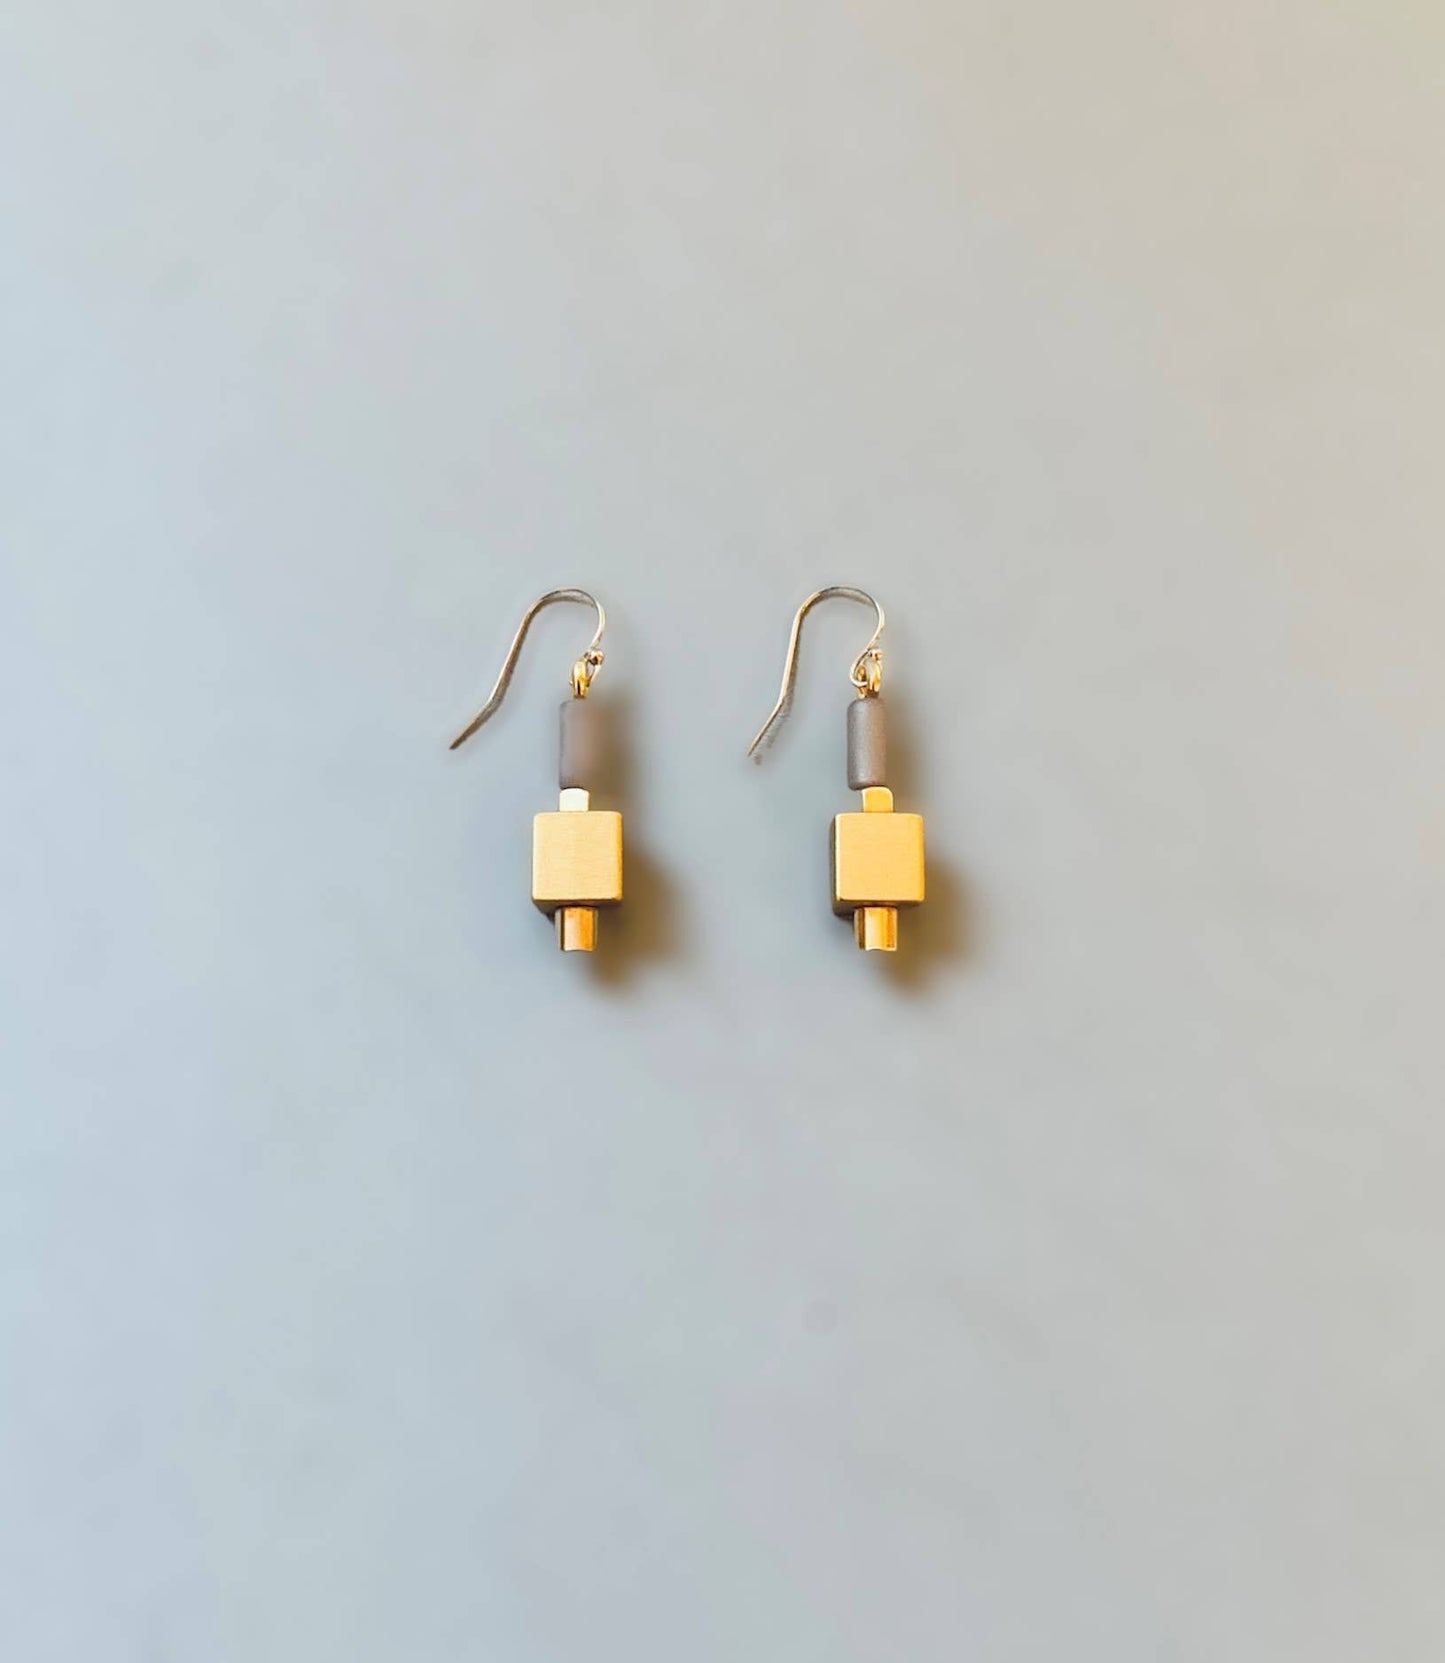 Cube earrings: Indigo